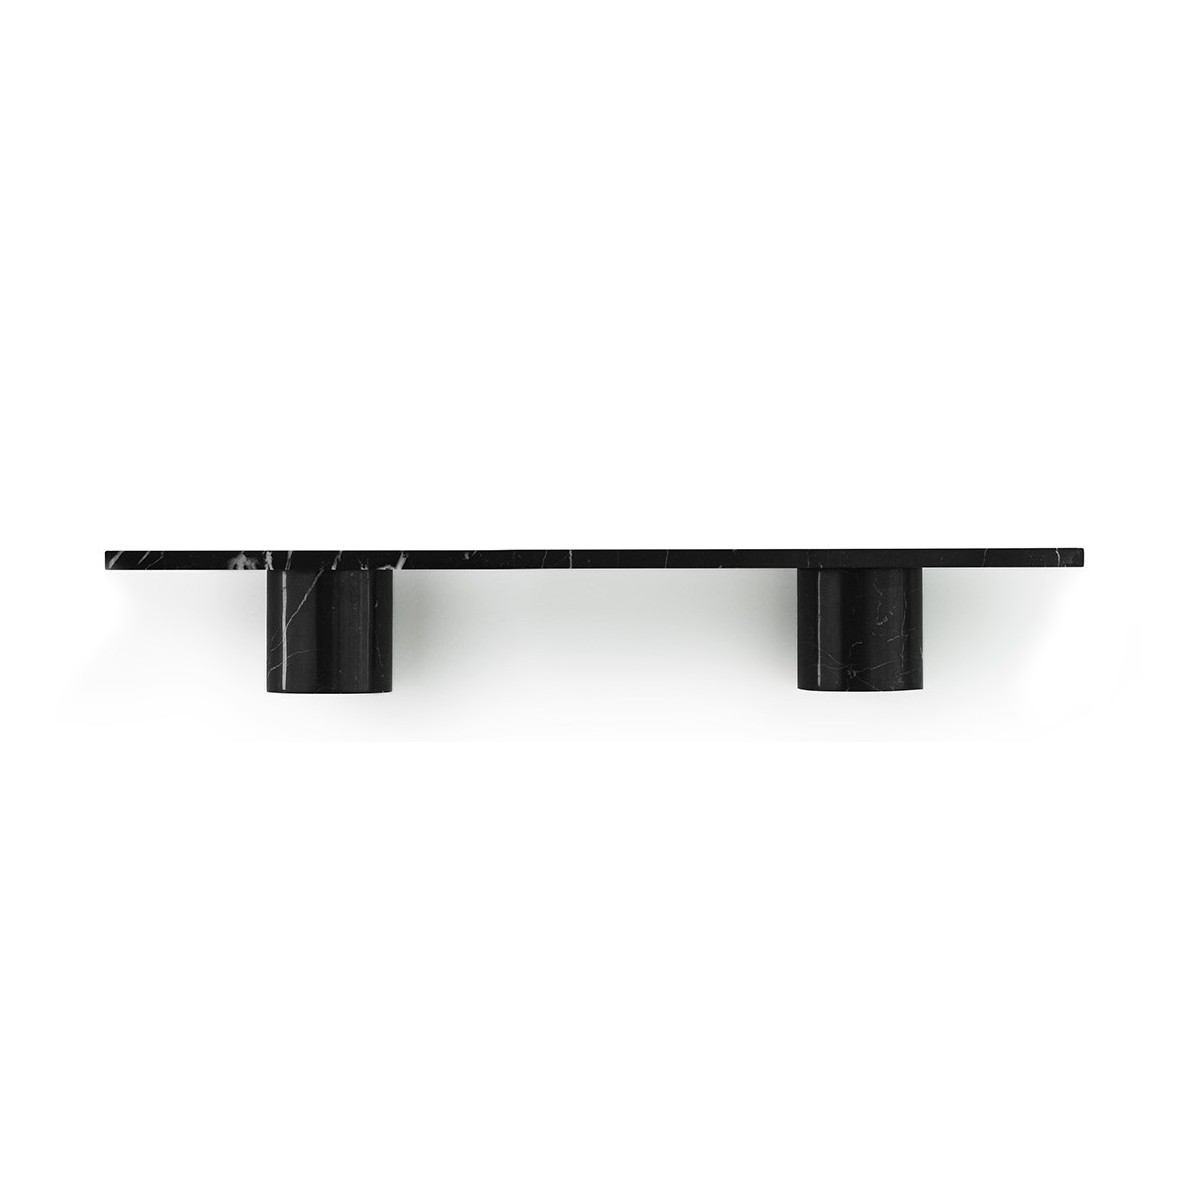 80cm - black marble - Sten shelf